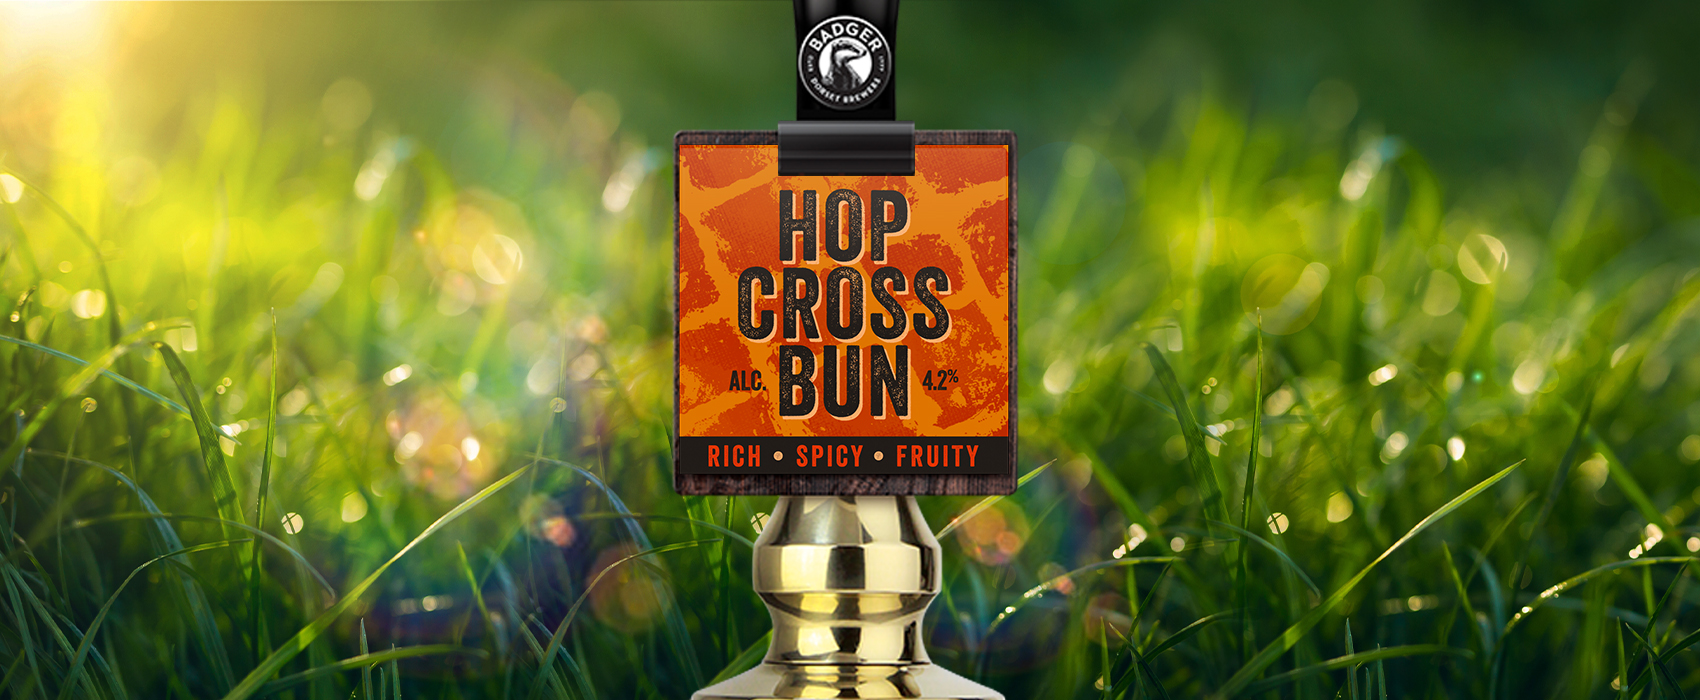 Hop Cross Bun Easter Themed Beer on Tap